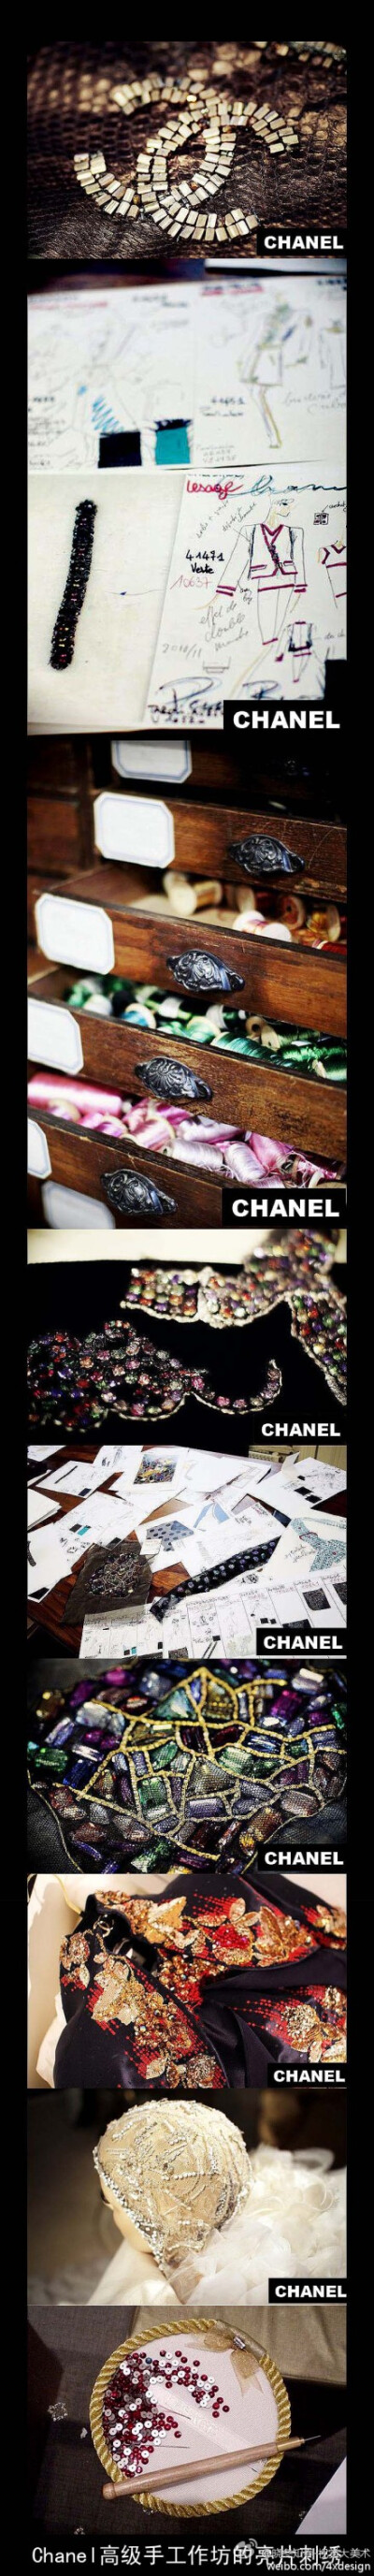 chanel手工坊 告诉你奢侈的真正含义----2002 年，François Lesage加盟CHANEL旗下，但仍继续是时装界巨子的首选刺绣供货商，更是Karl Lagerfeld必不可少亦无法取替的合作伙伴.晓冬知春